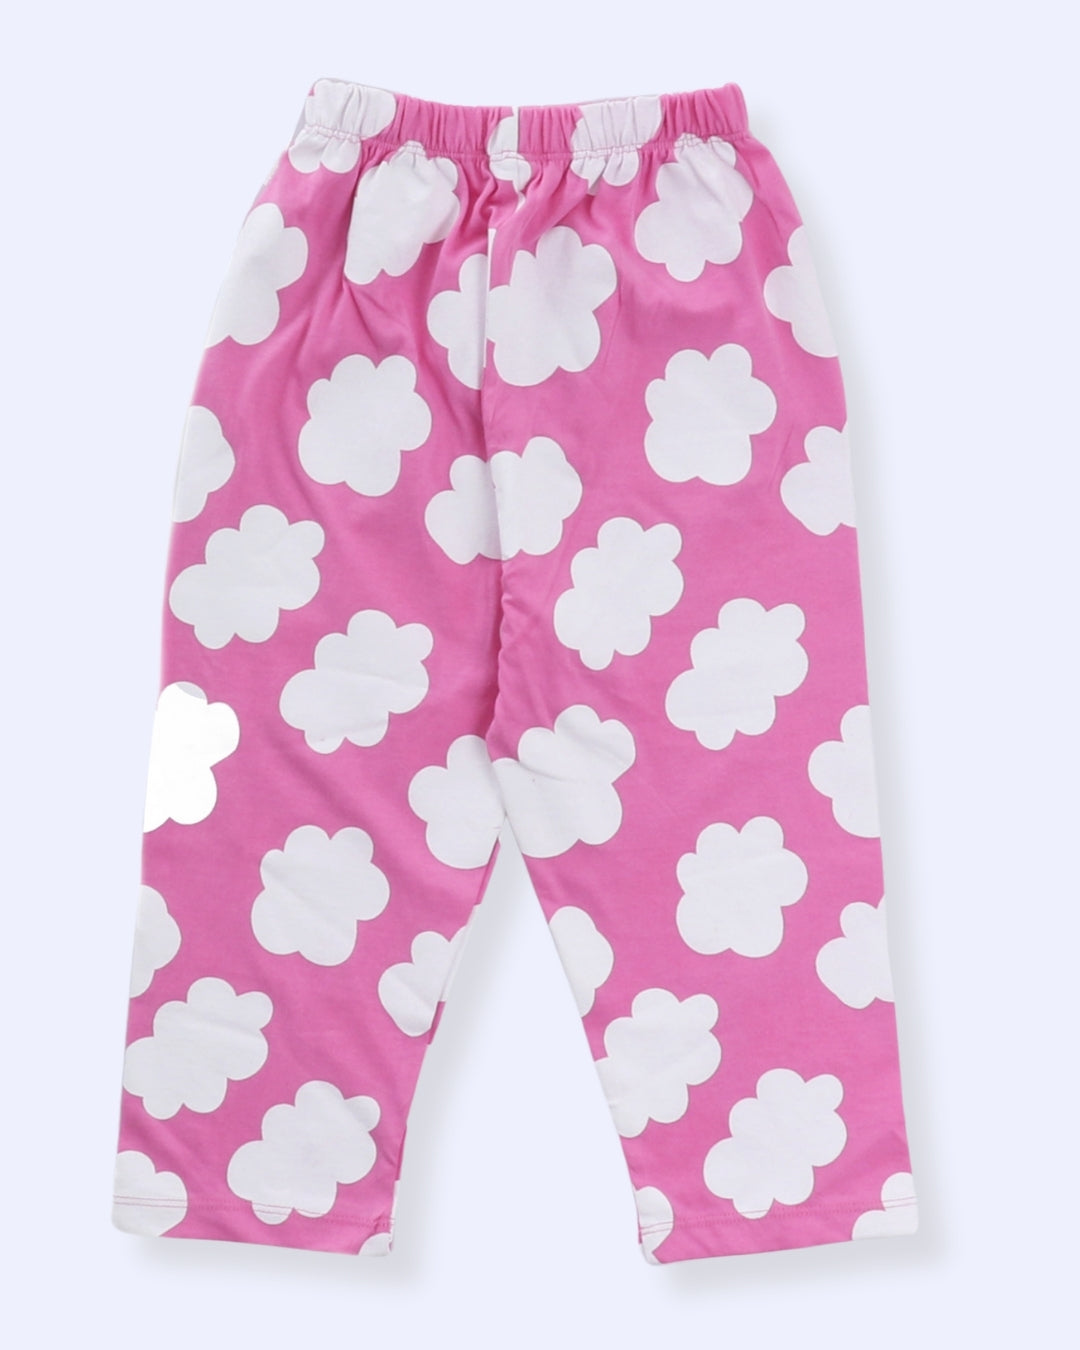 Pink Cloud Printed Cotton Nightwear for Girls